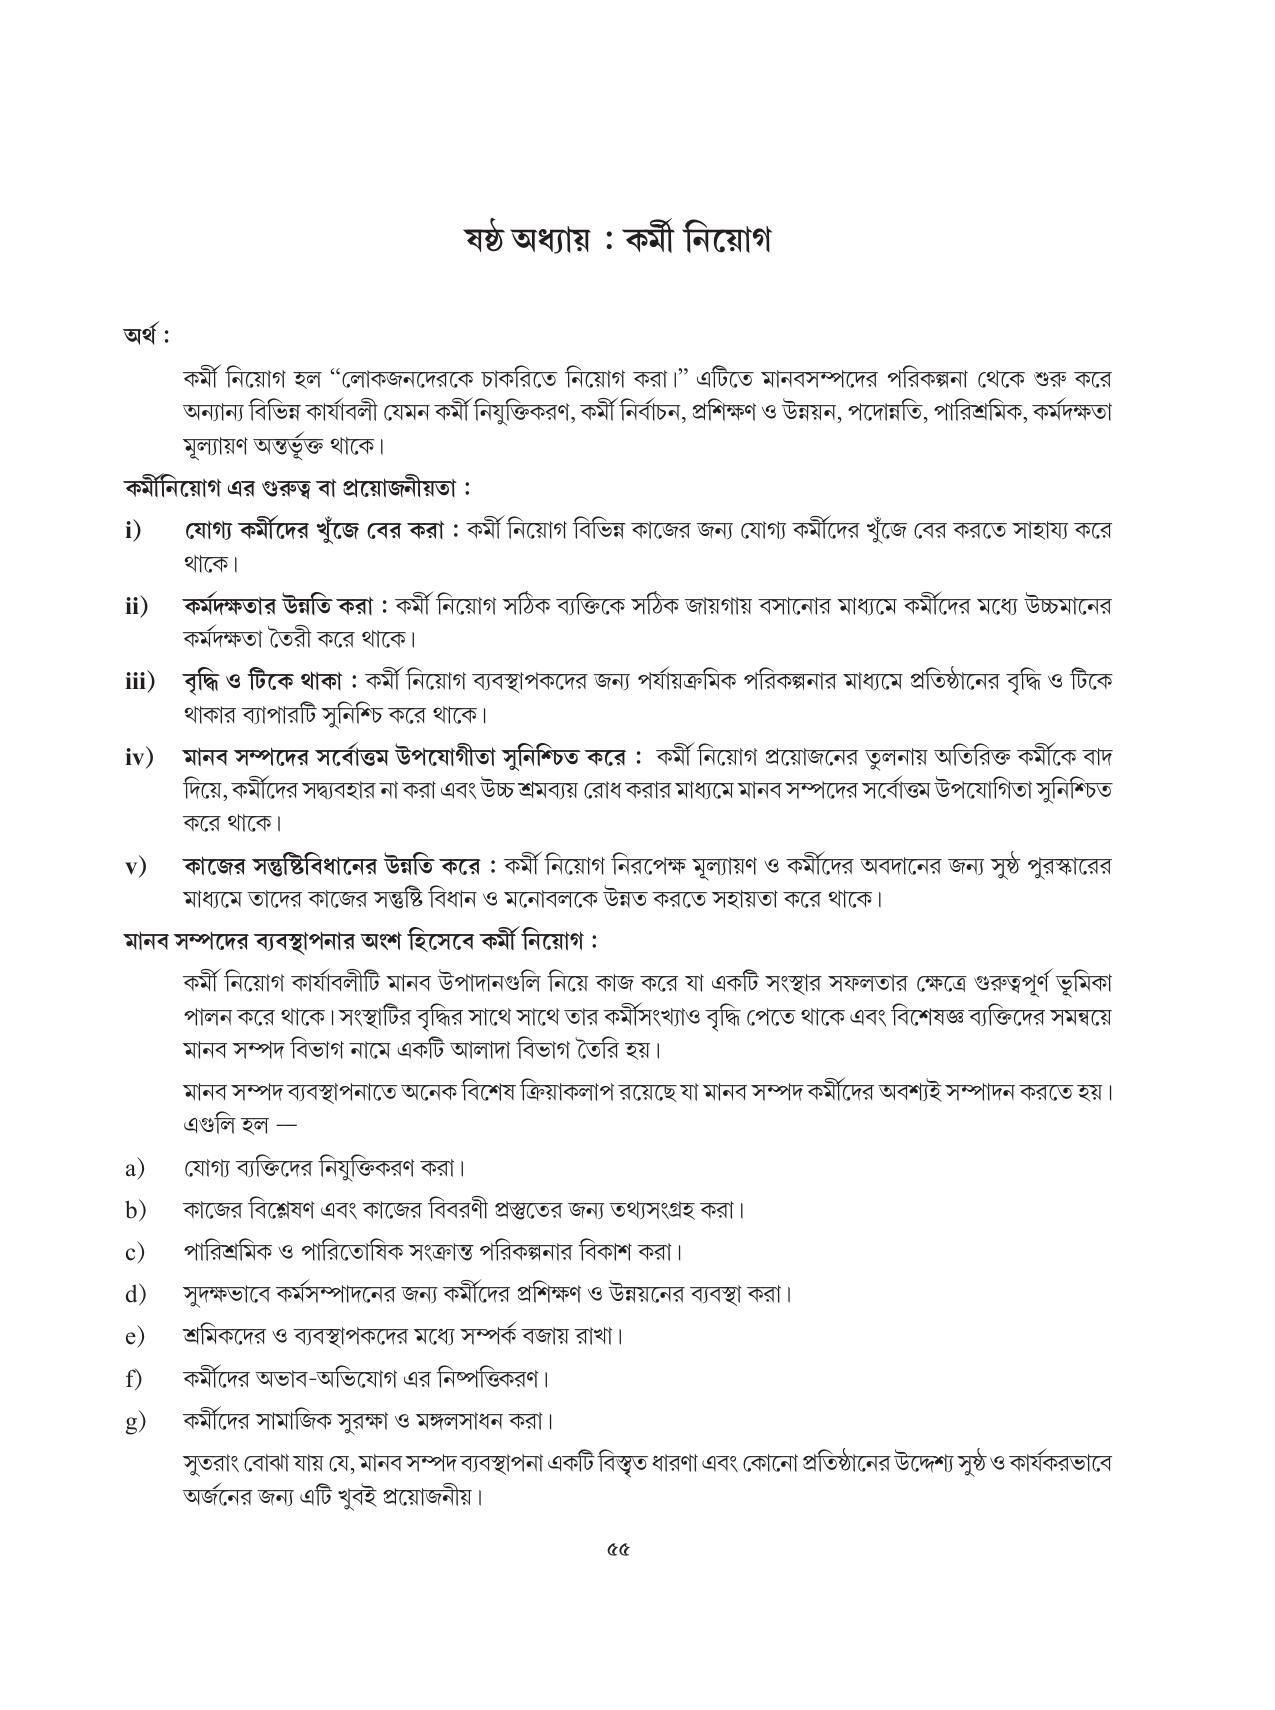 Tripura Board Class 12 Karbari Shastra Bengali Version Workbooks - Page 55